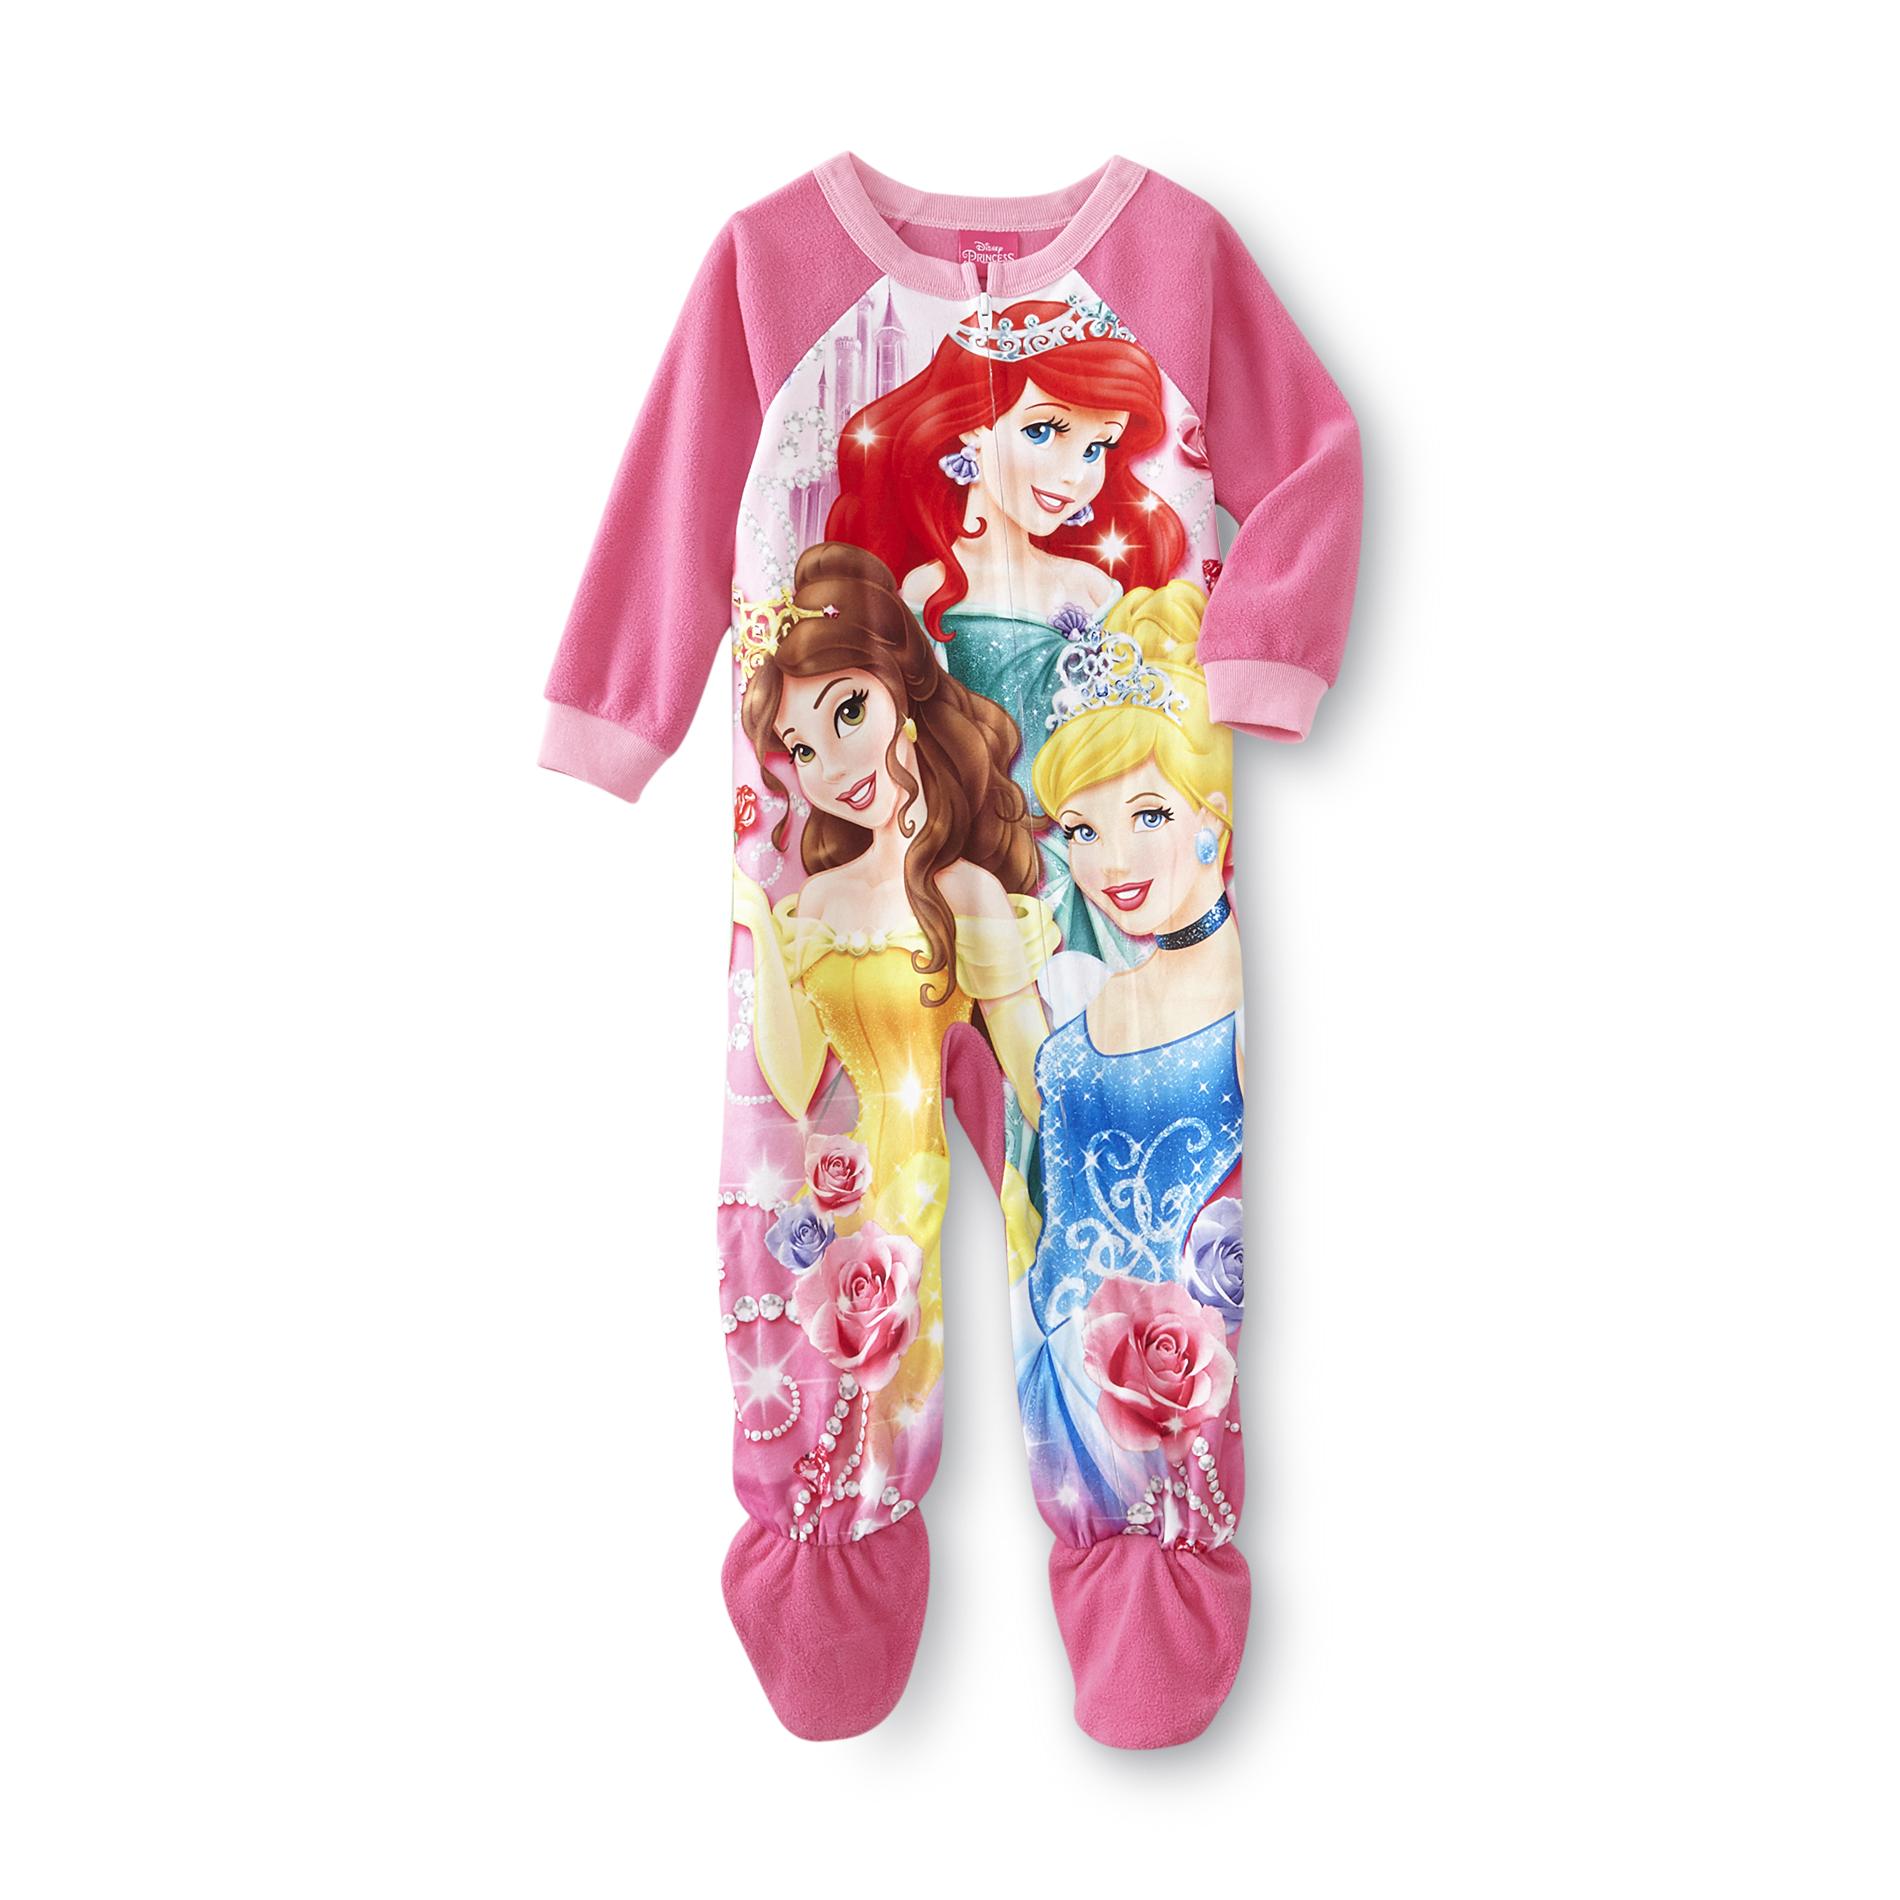 Princess Infant & Toddler Girl's Footed Pajamas